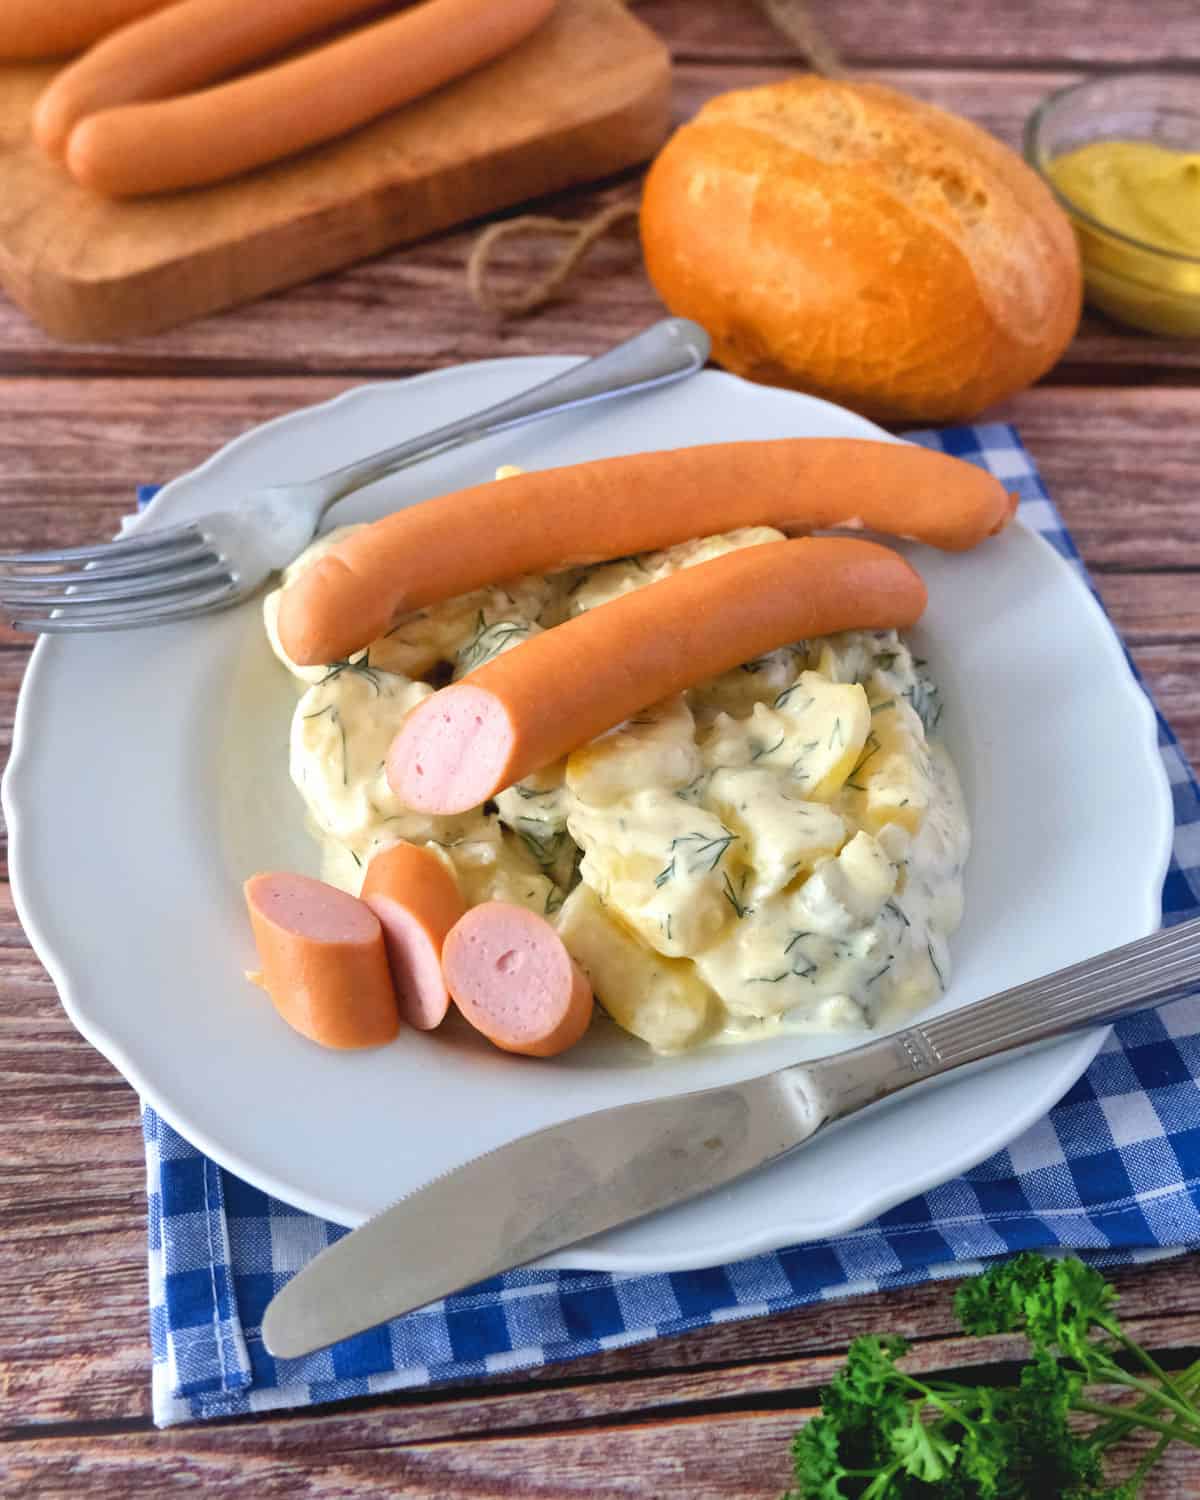 Frankfurter Sausages with Potato salad